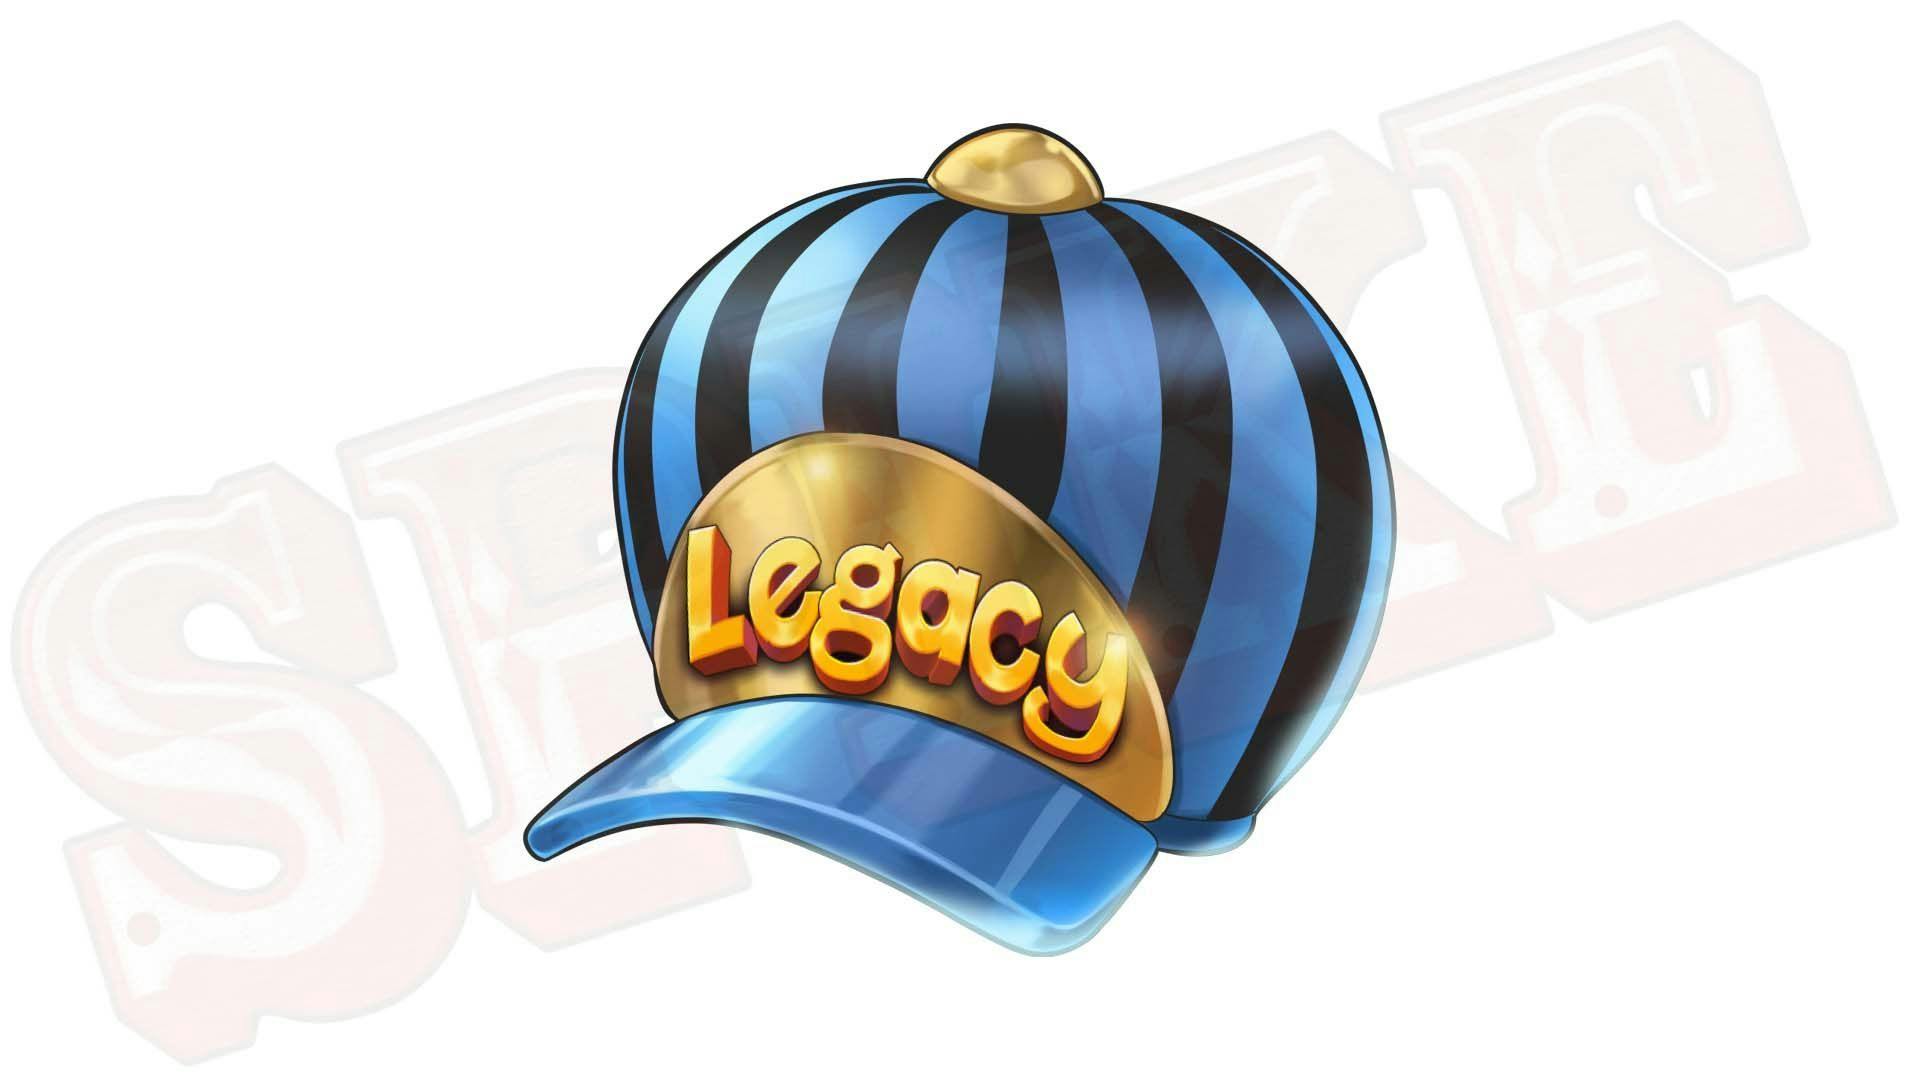 Hugo Legacy Slot Simbolo Cappello